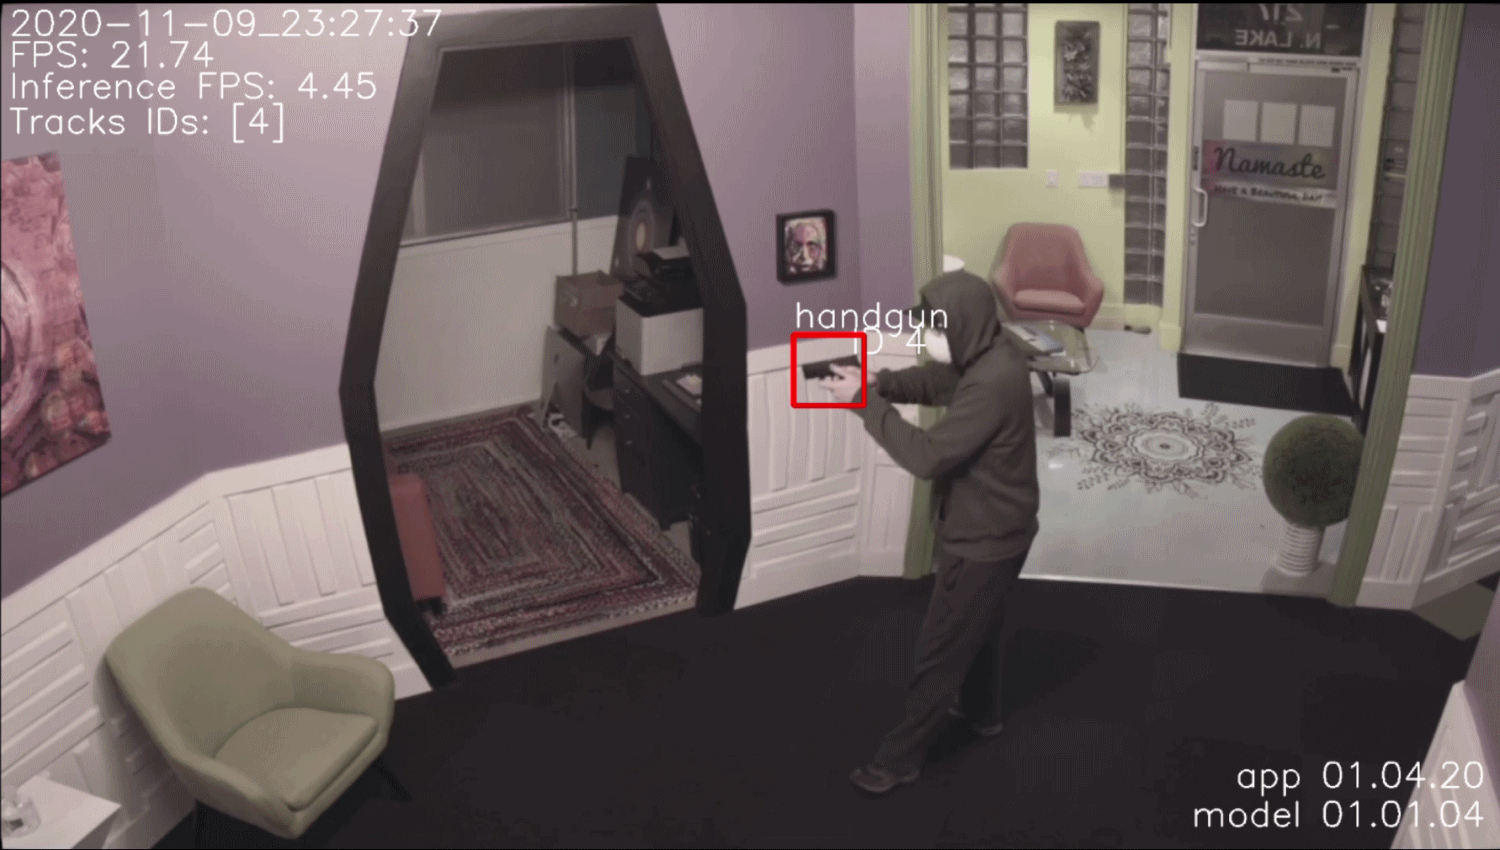 gun detection camera 